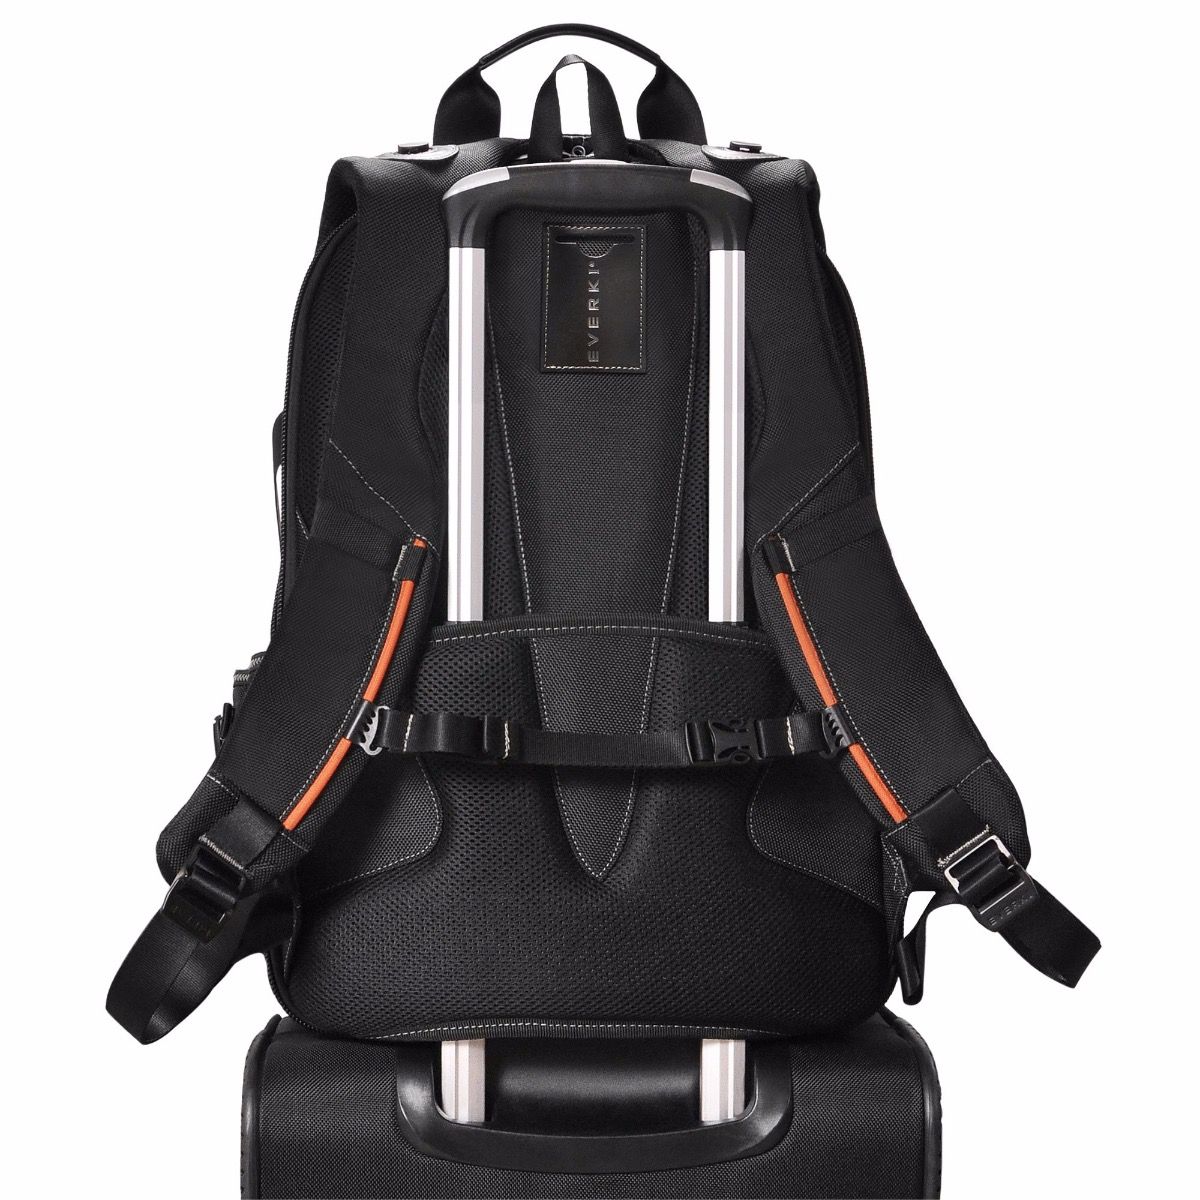 premium travel laptop backpack